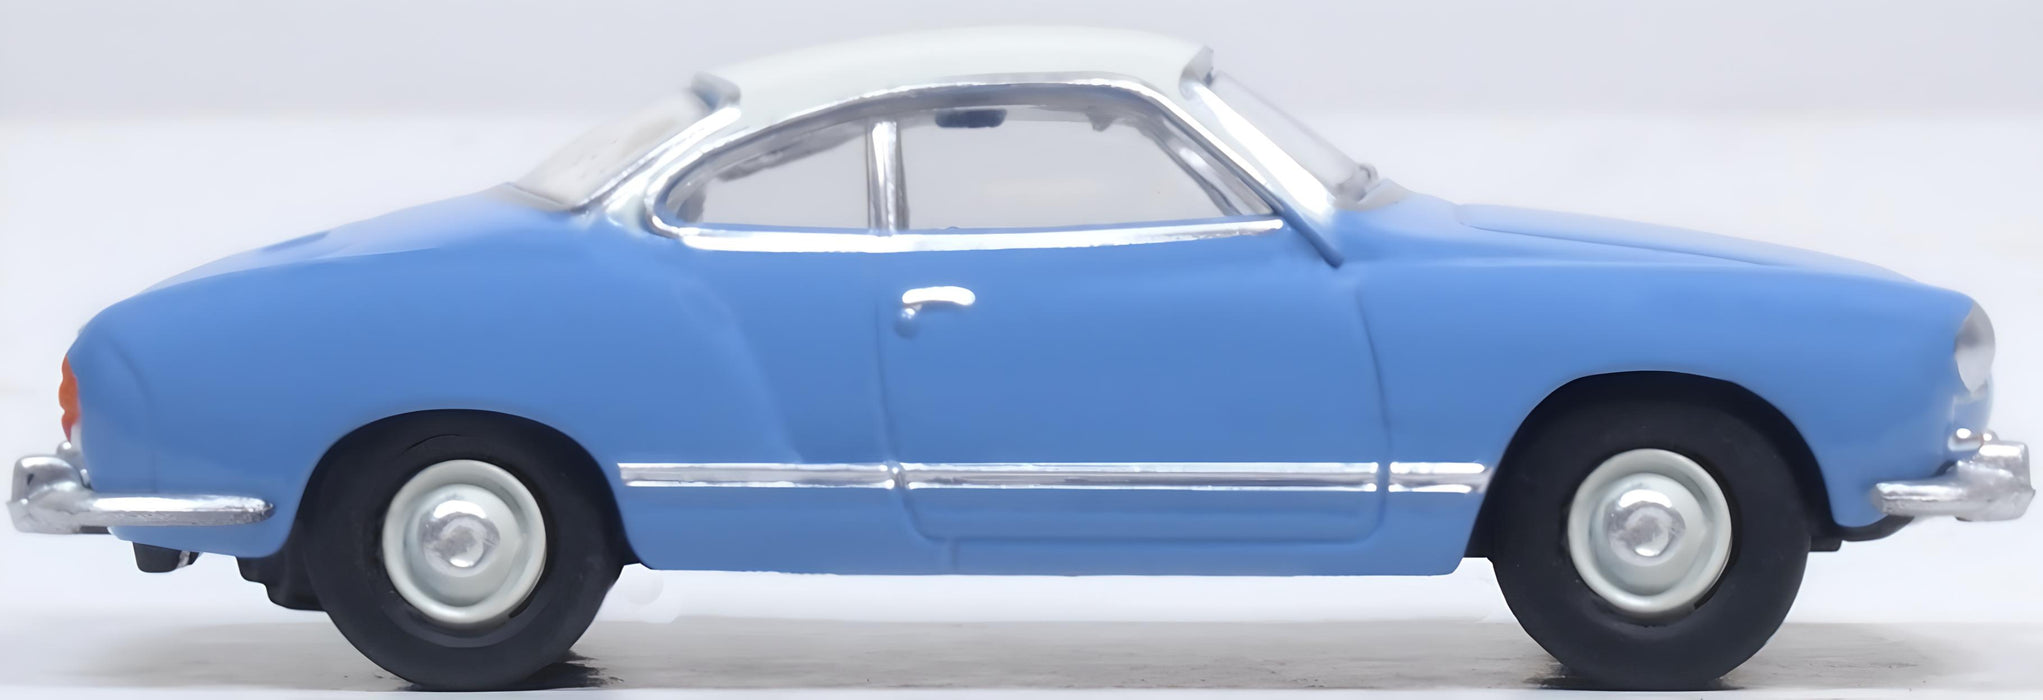 Oxrord Diecast 1:76 scale model of the VW Karmann Ghia Lavender/Pearl White